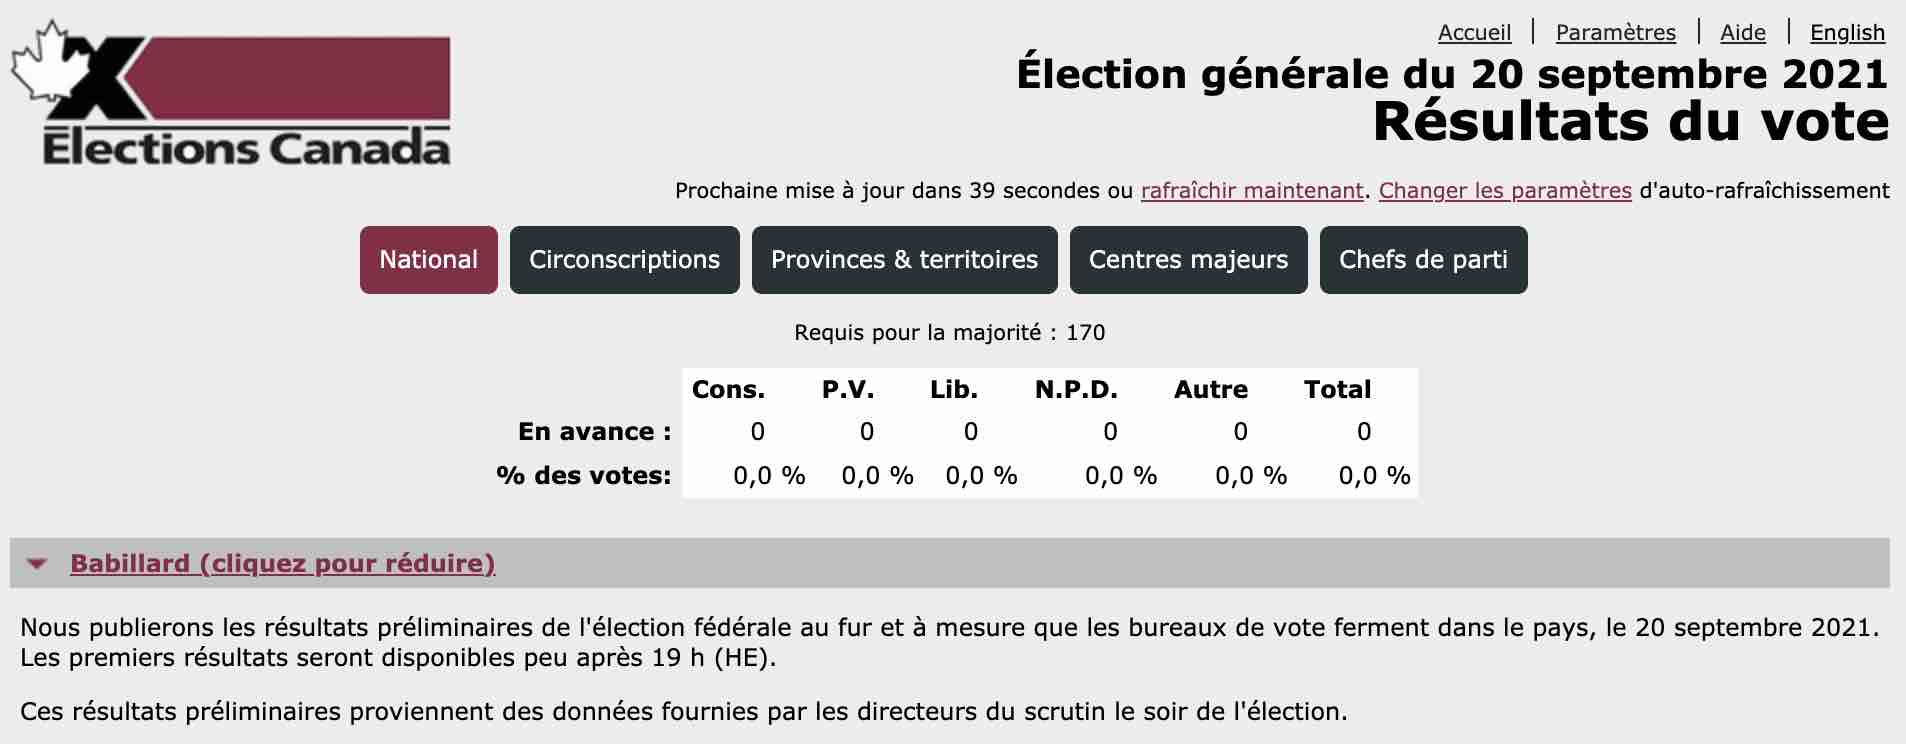 resultats-preliminaires-d-election-canada-20-septembre-2021.jpg